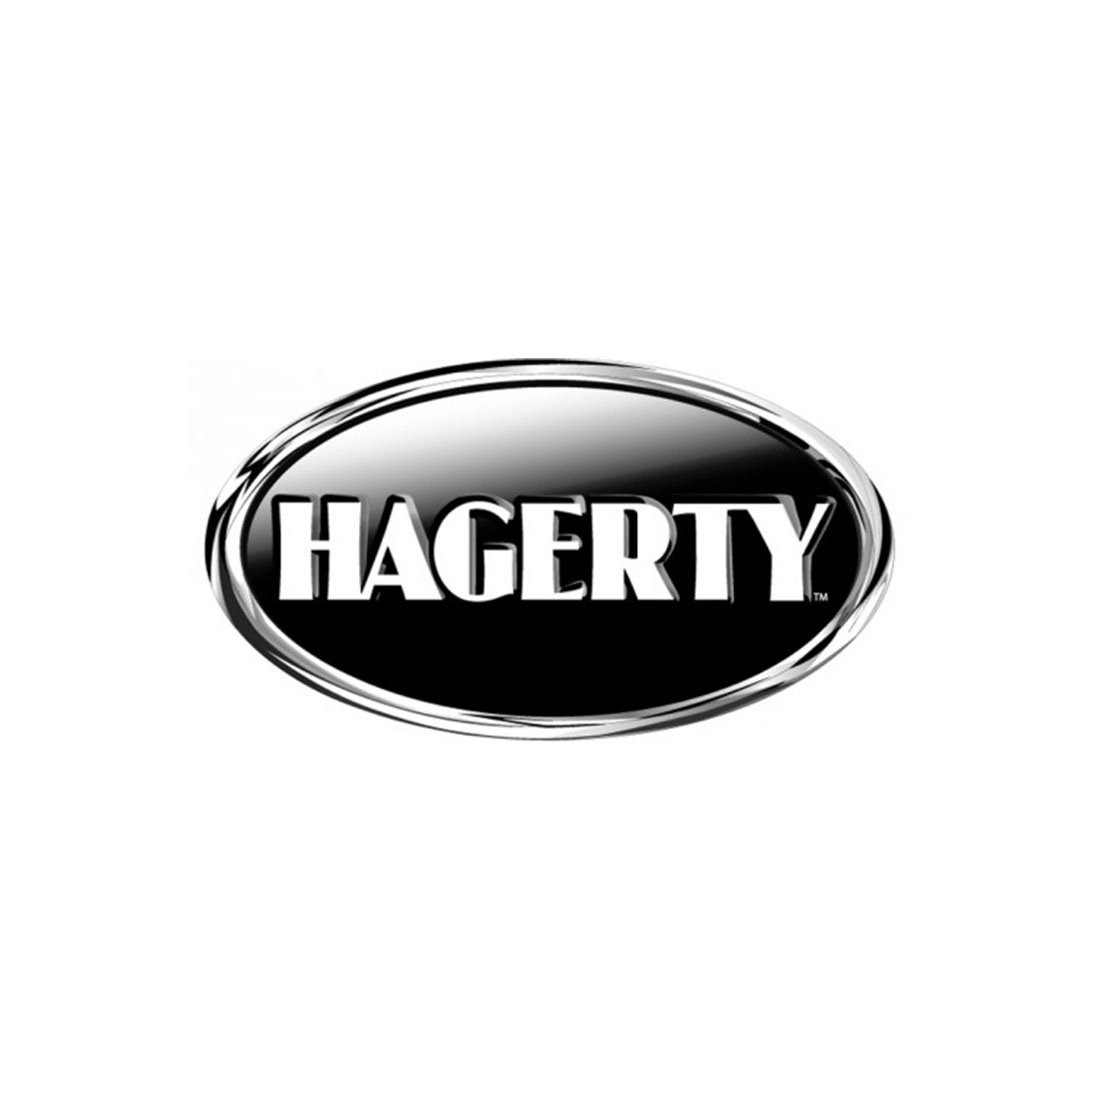 137-hagerty-insurance-logo.jpg